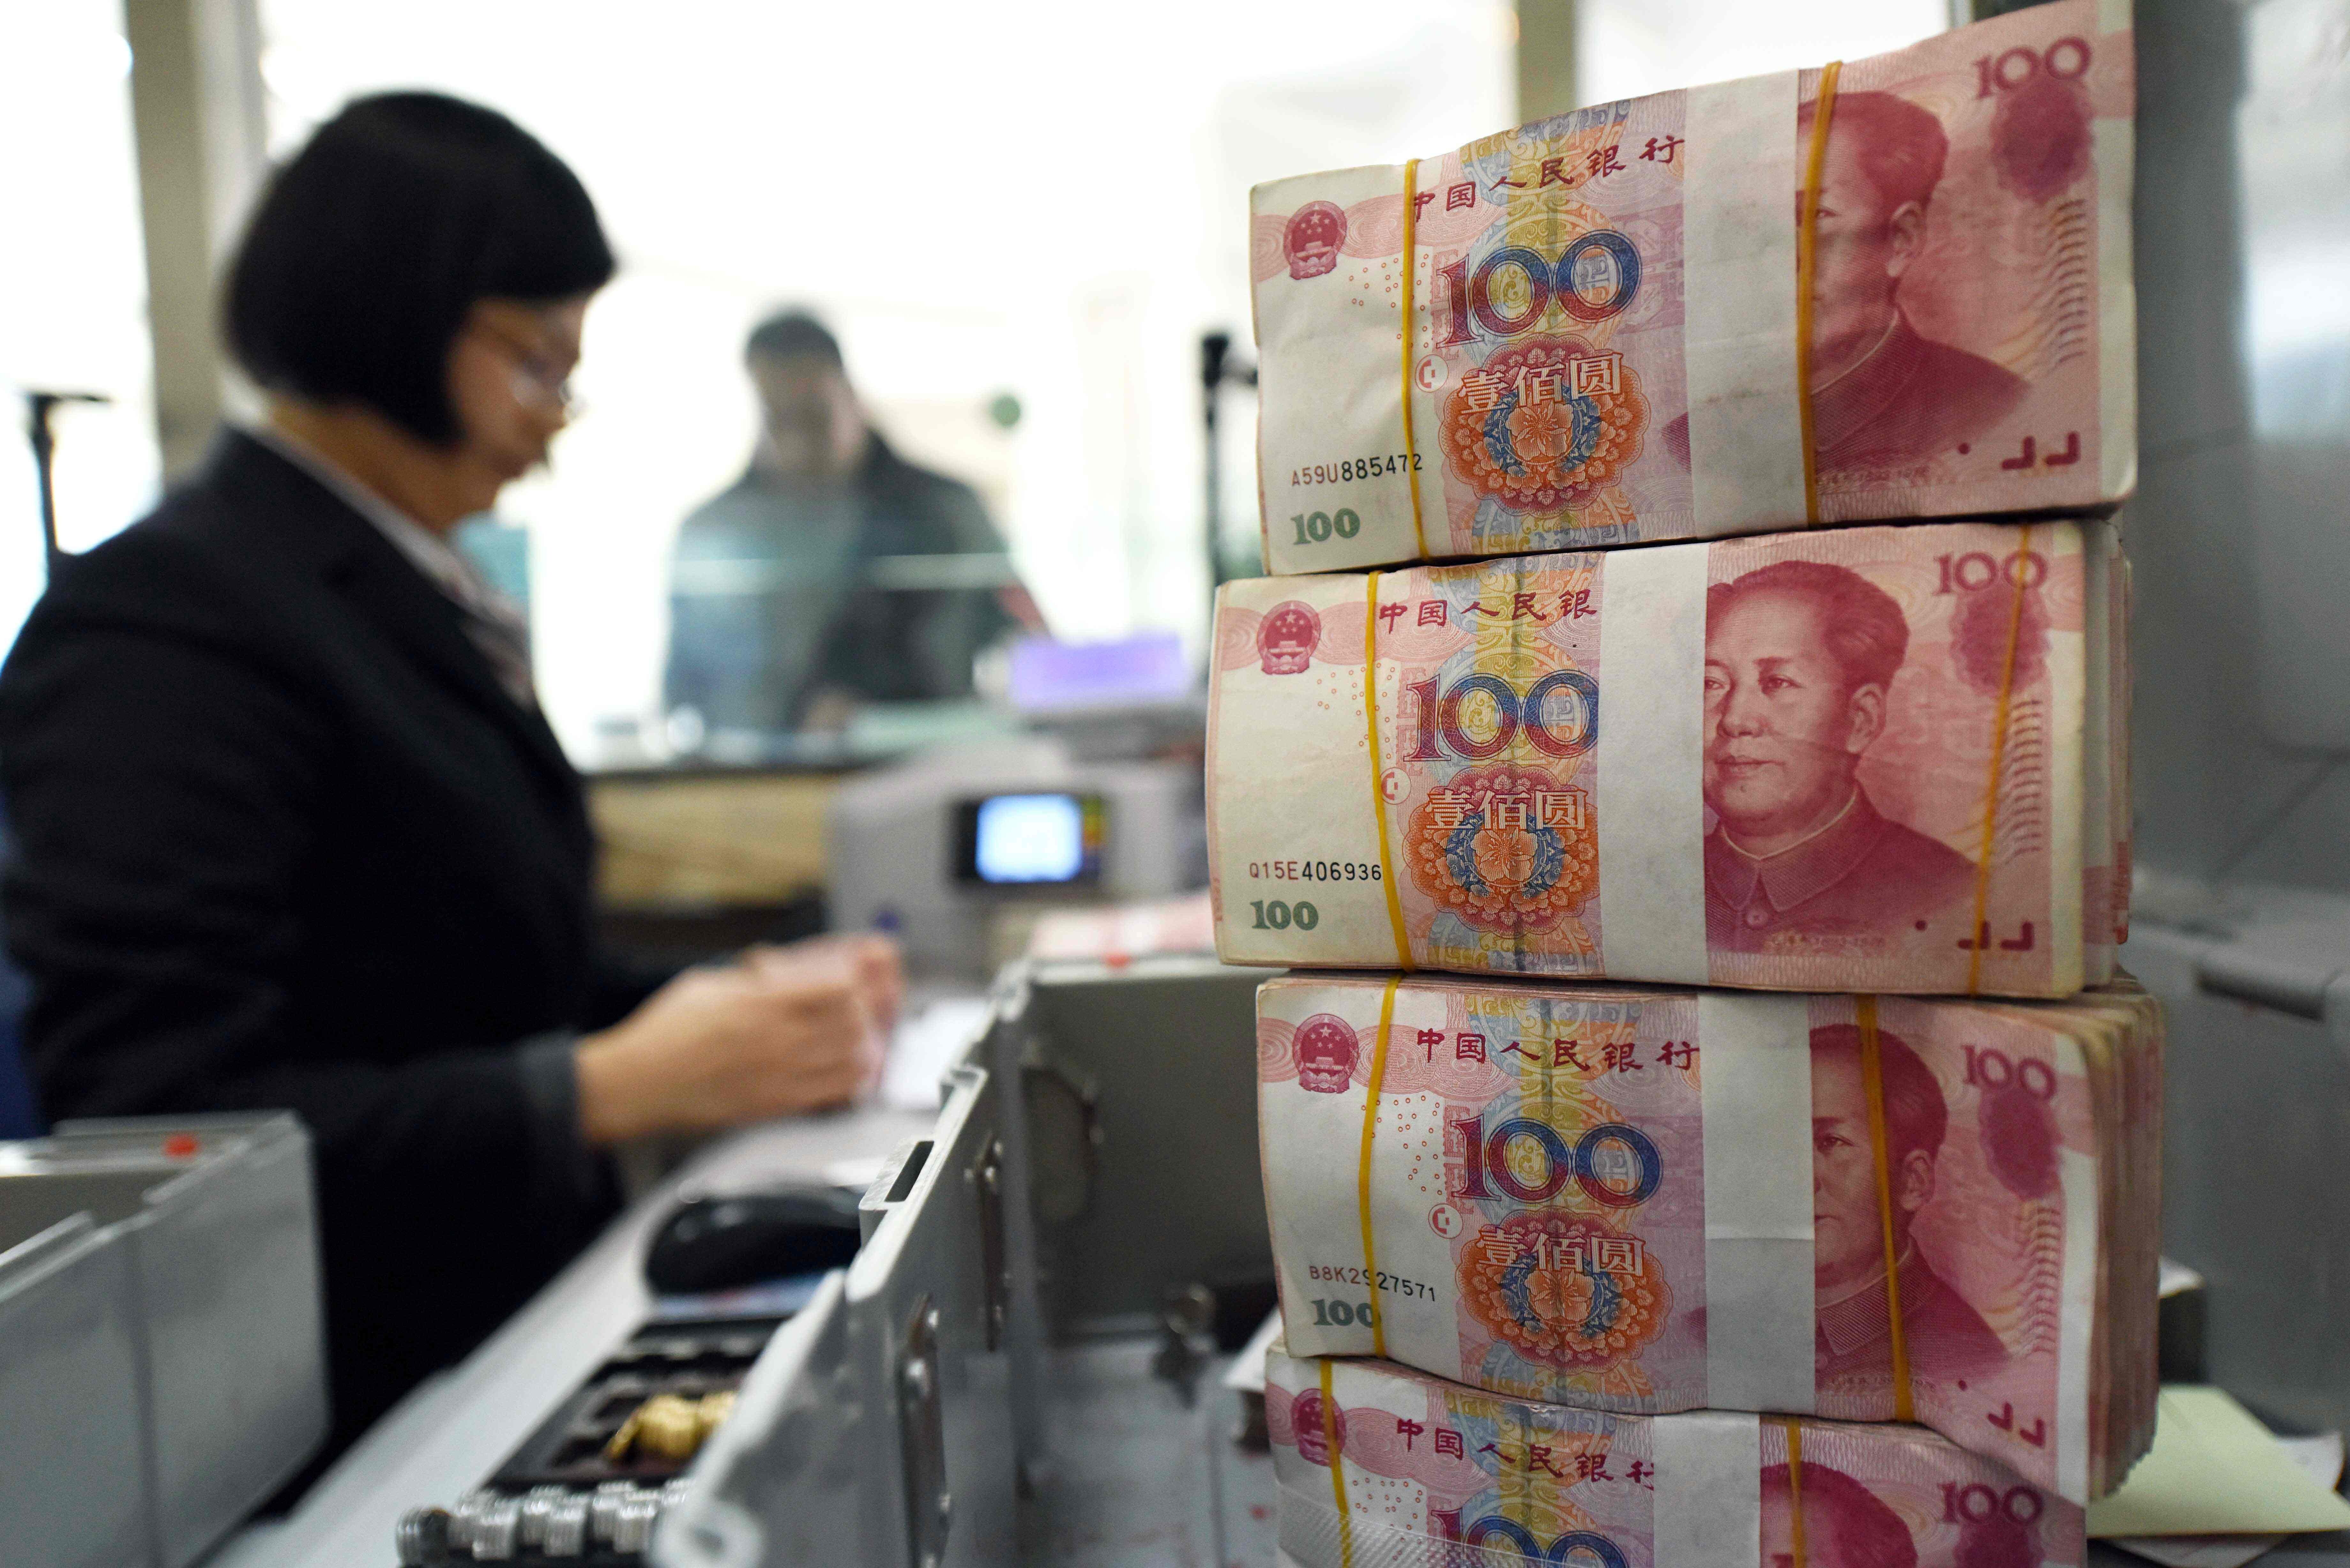 A teller counts money at bank in Lianyungang, Jiangsu province. Photo: AFP